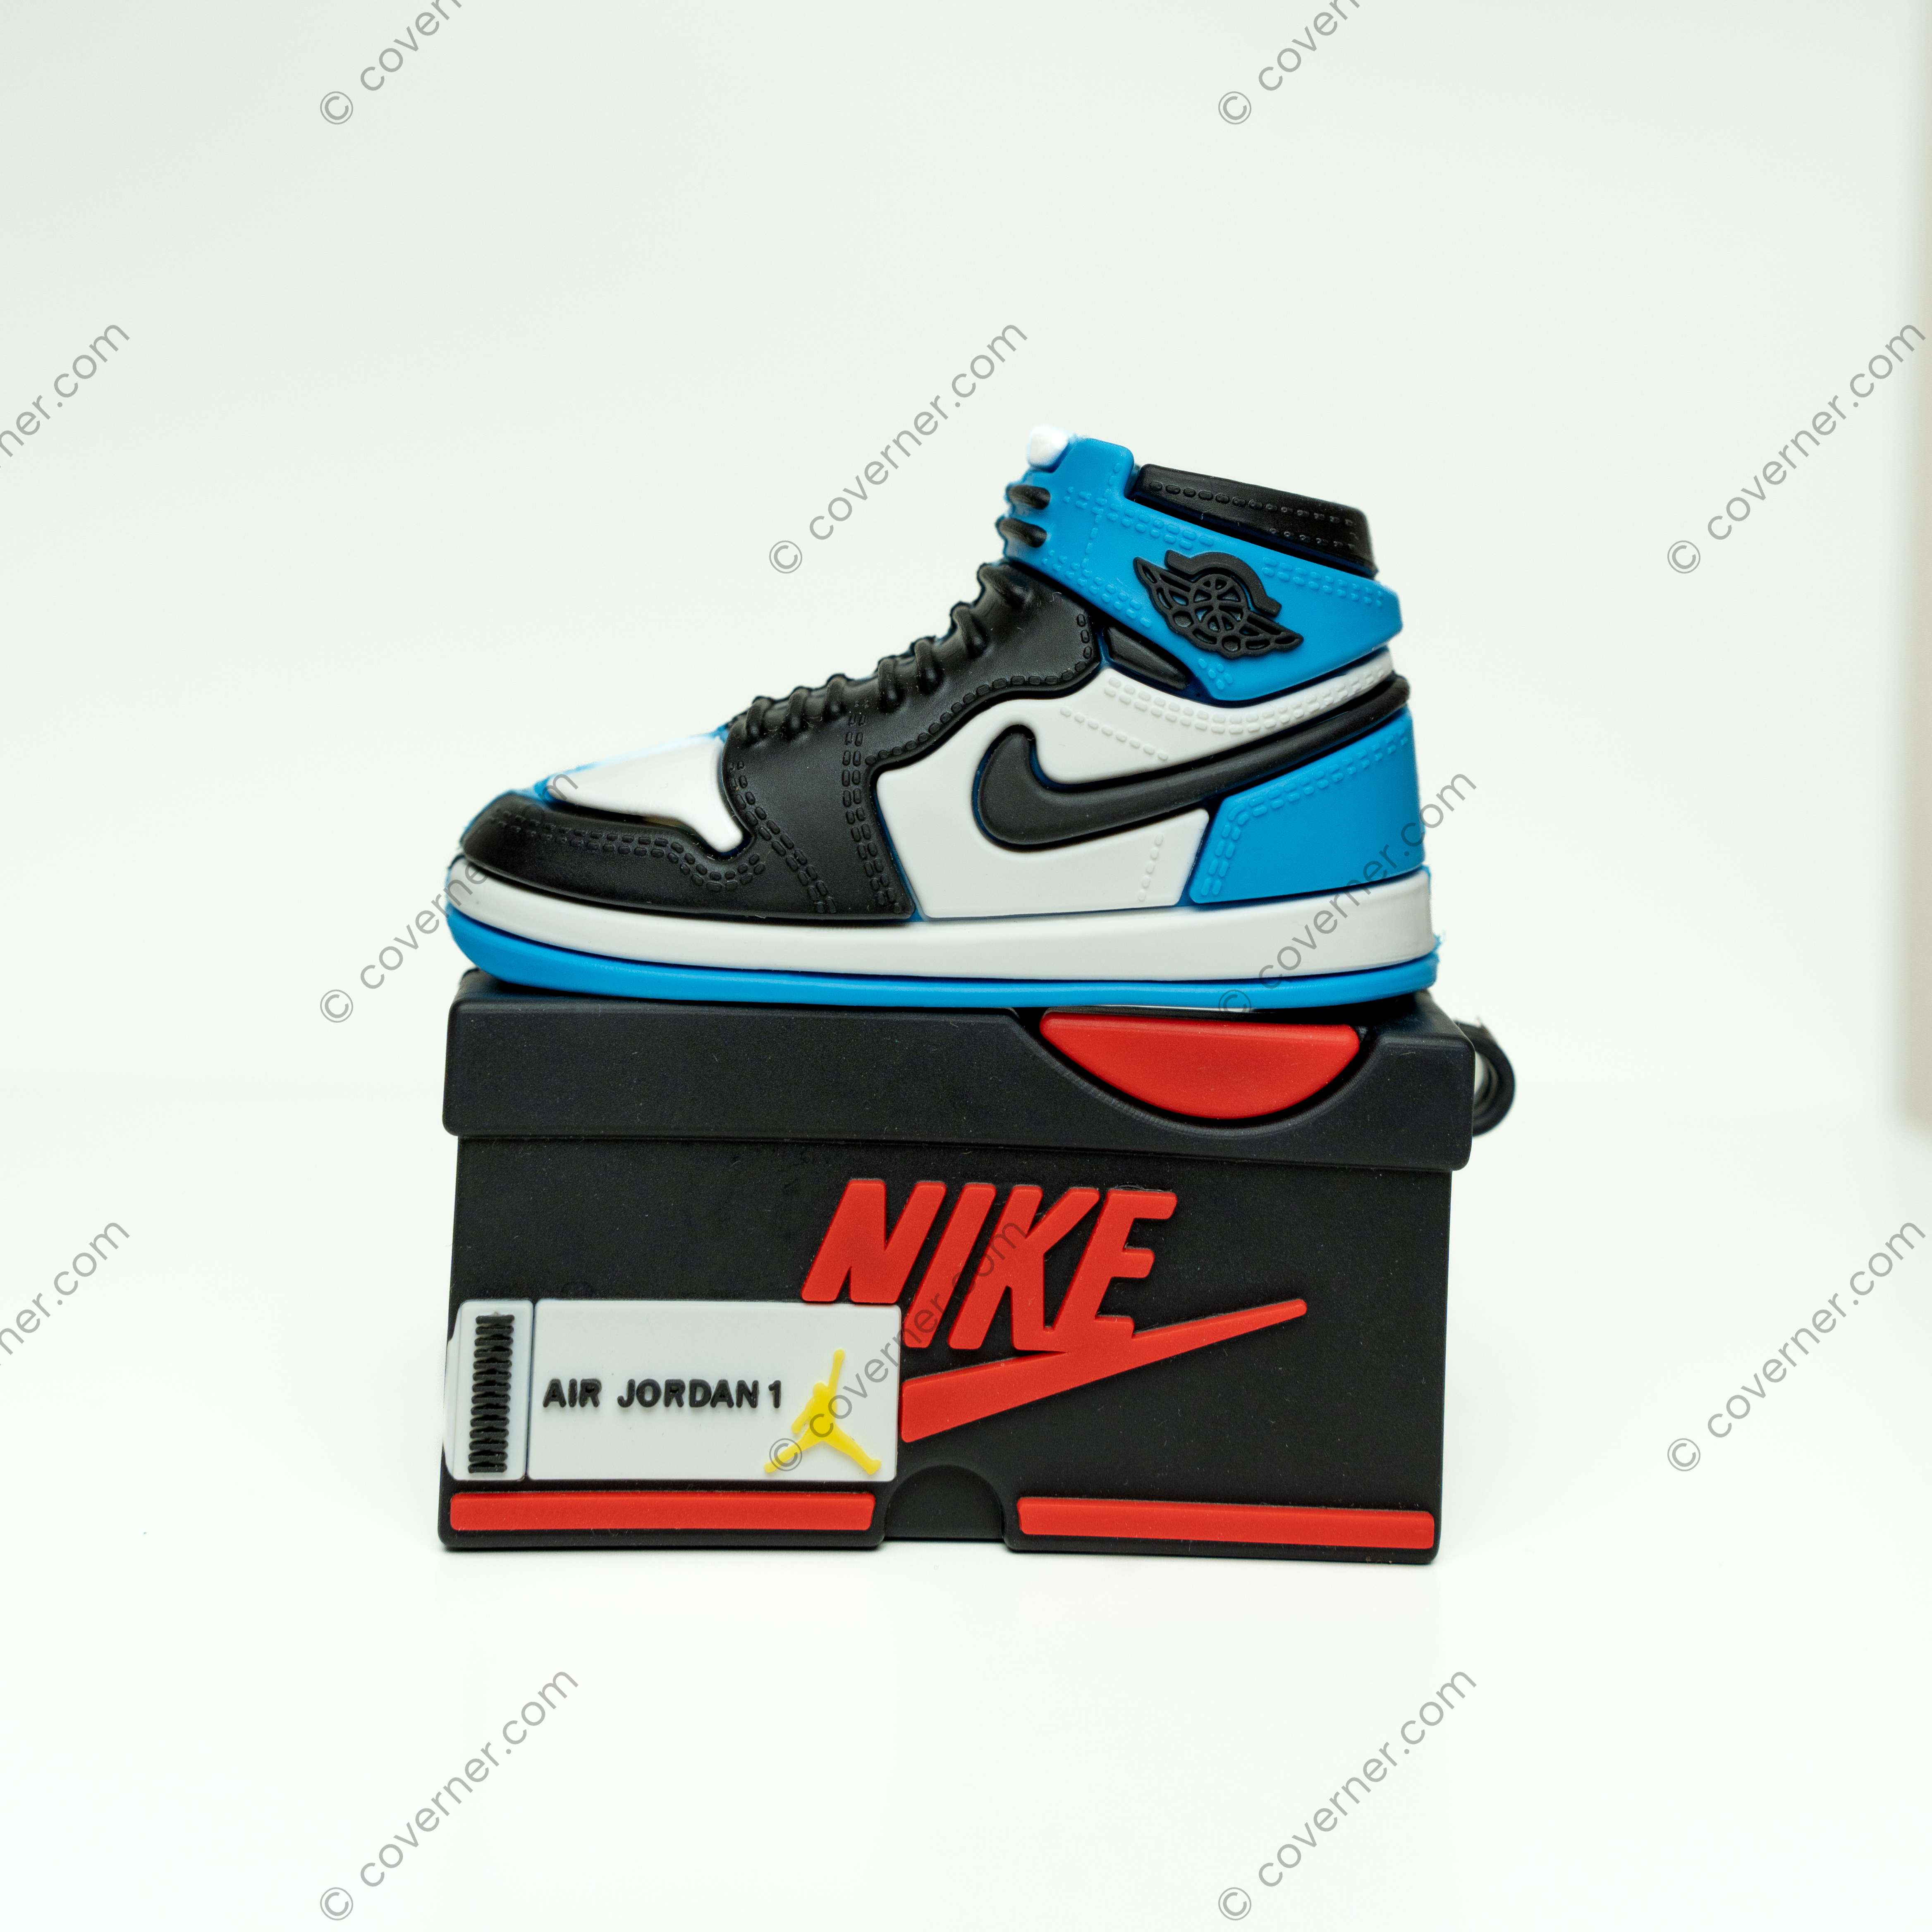 Sneaker Airpods Cases - Air Jordan 1 Blue Black